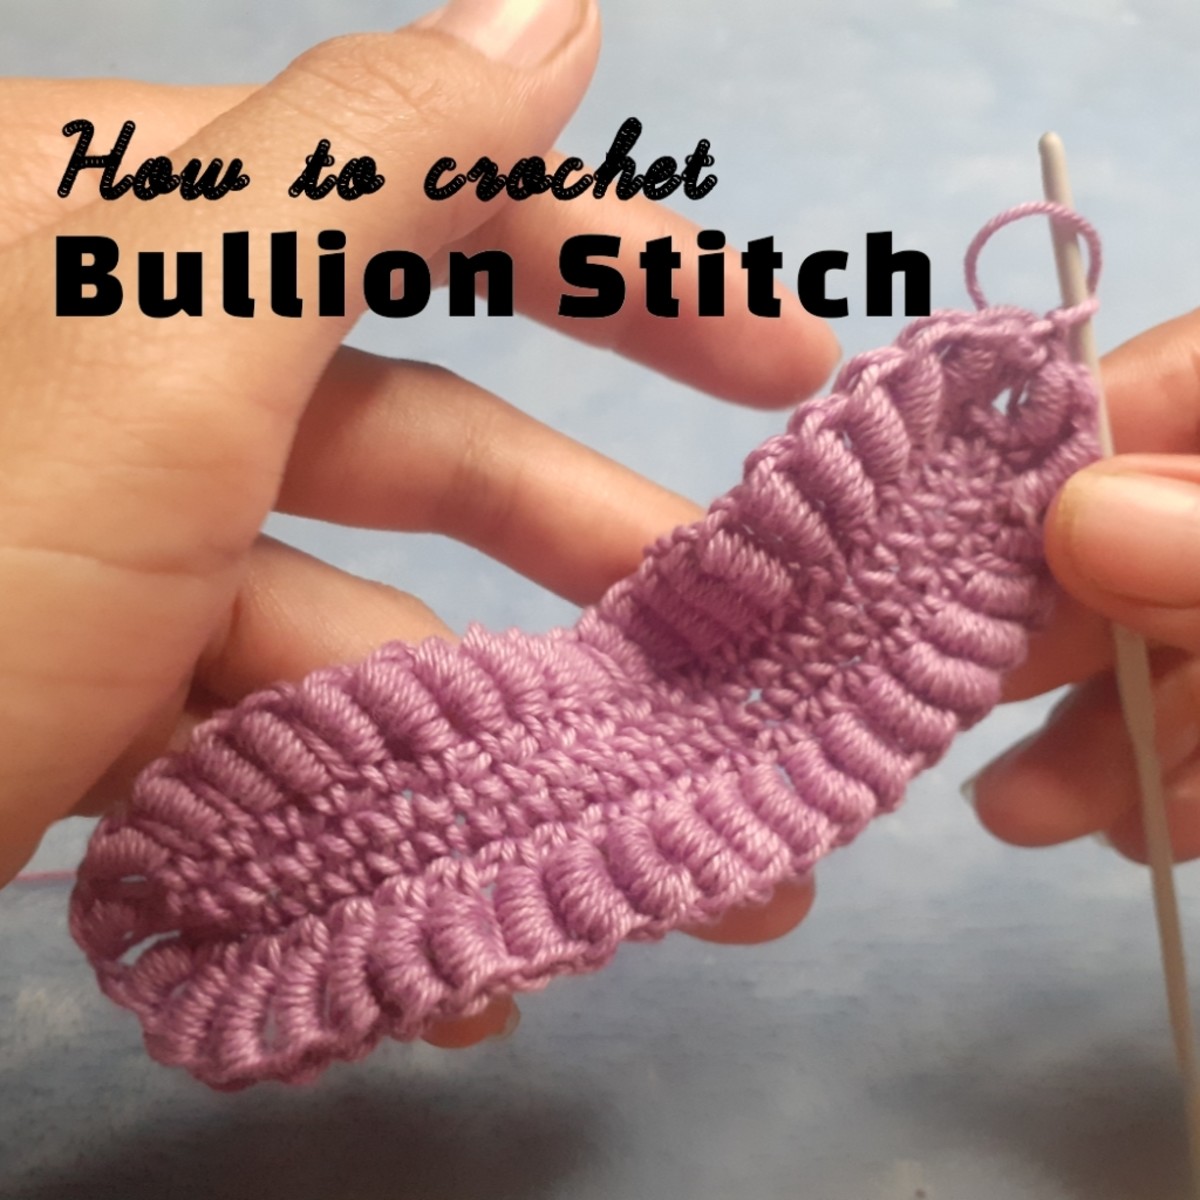 how-to-crochet-bullion-stitch